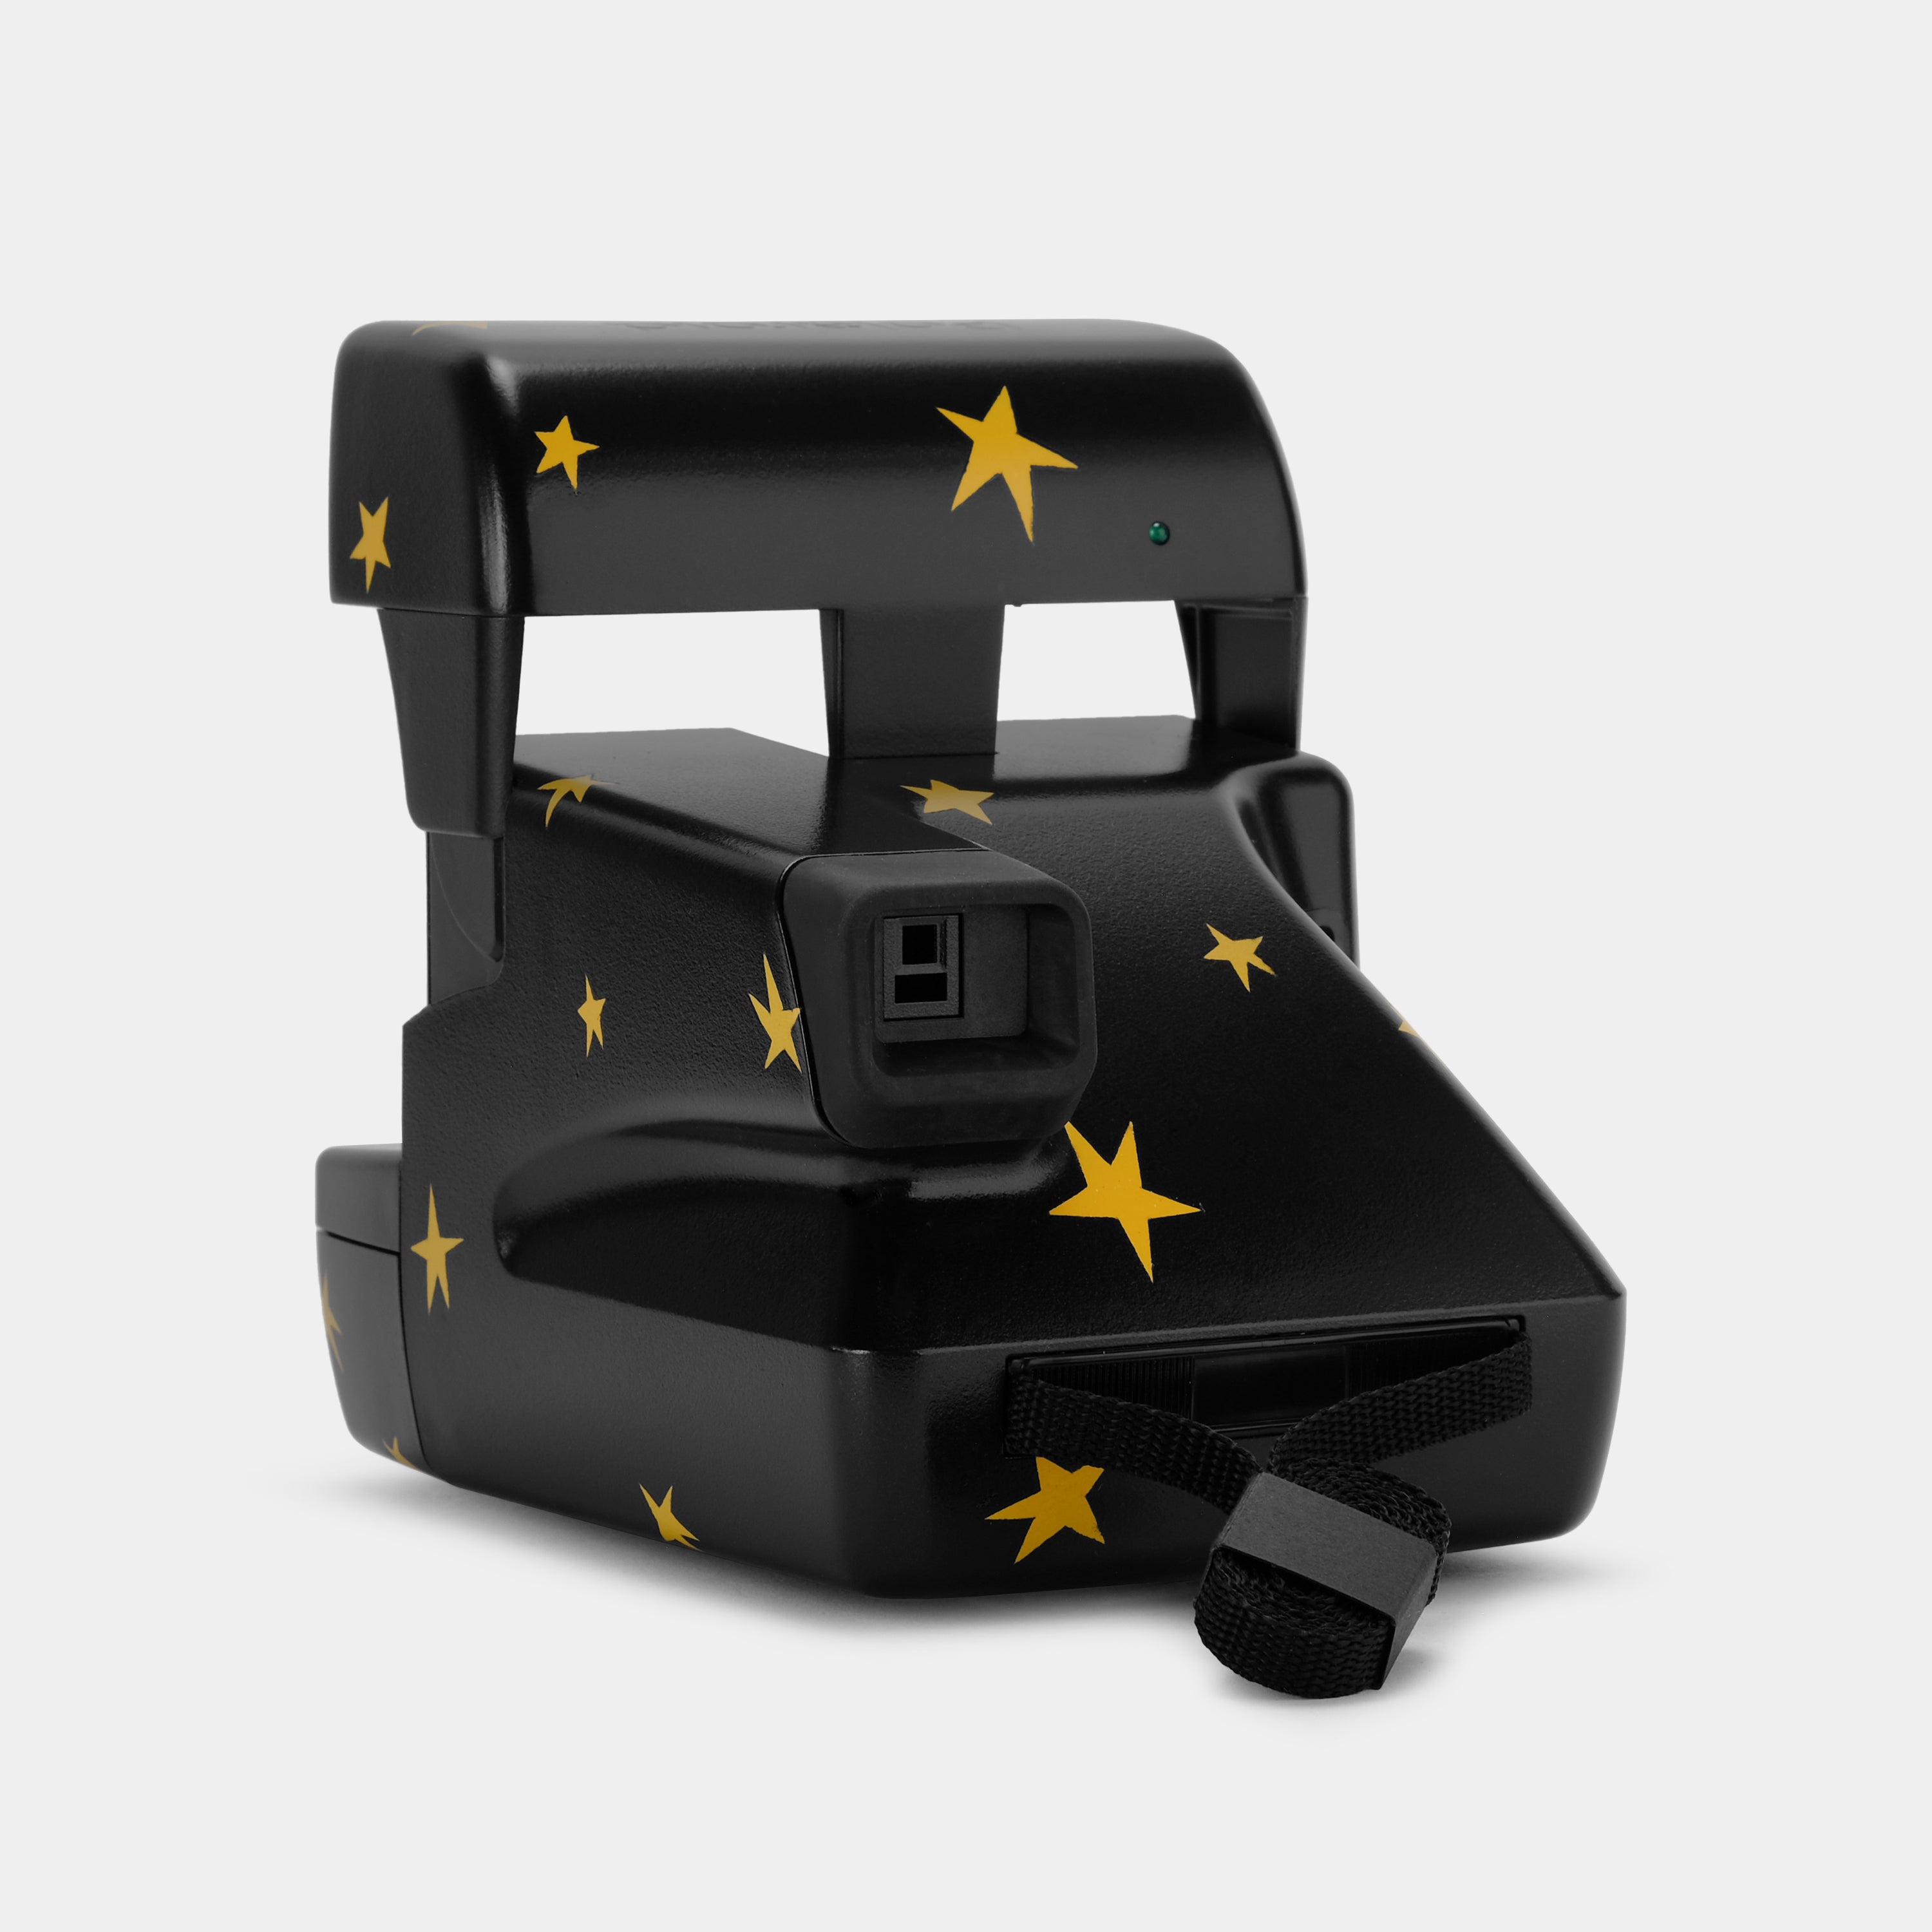 Polaroid 600 Black and Yellow Stars Instant Film Camera